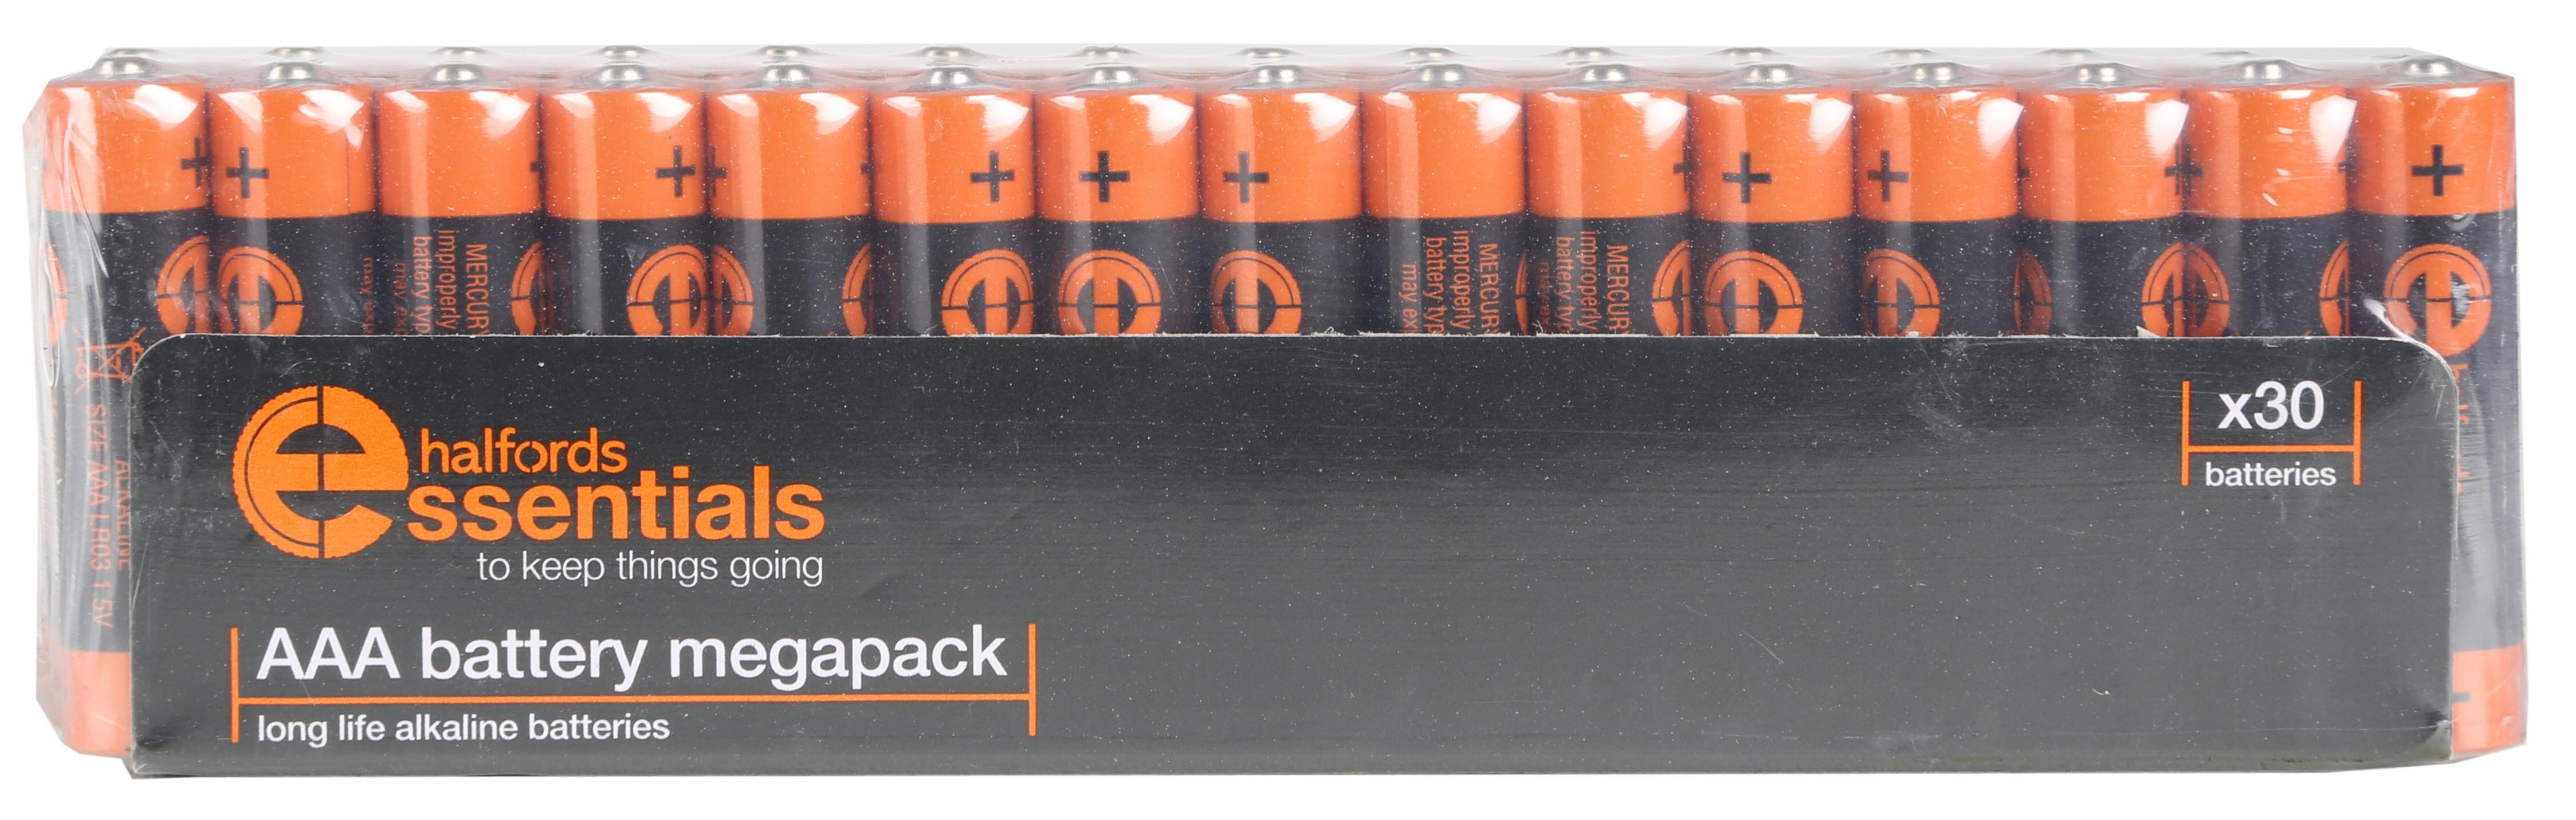 Halfords Essential Batteries Aaa X30